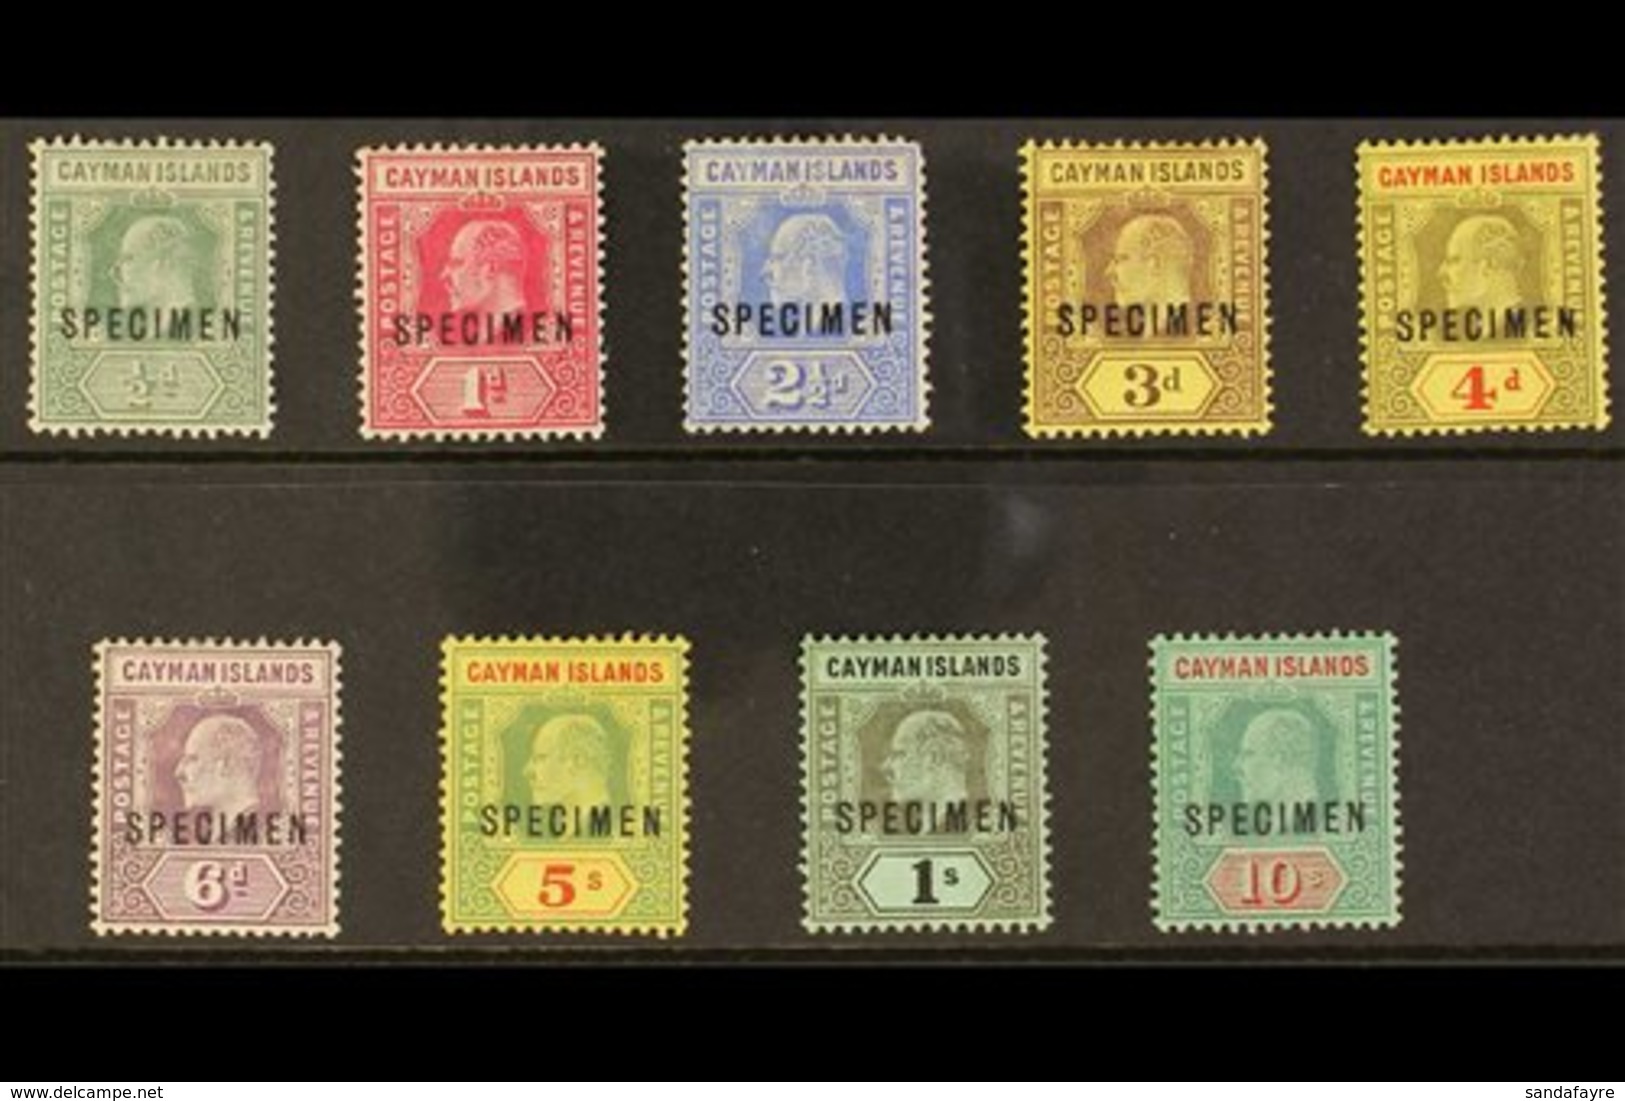 \Y 1907-09\Y KEVII Overprinted "SPECIMEN" Complete Set, SG 25s/30s And 32s/34s, Fine Mint. (9 Stamps) For More Images, P - Cayman Islands